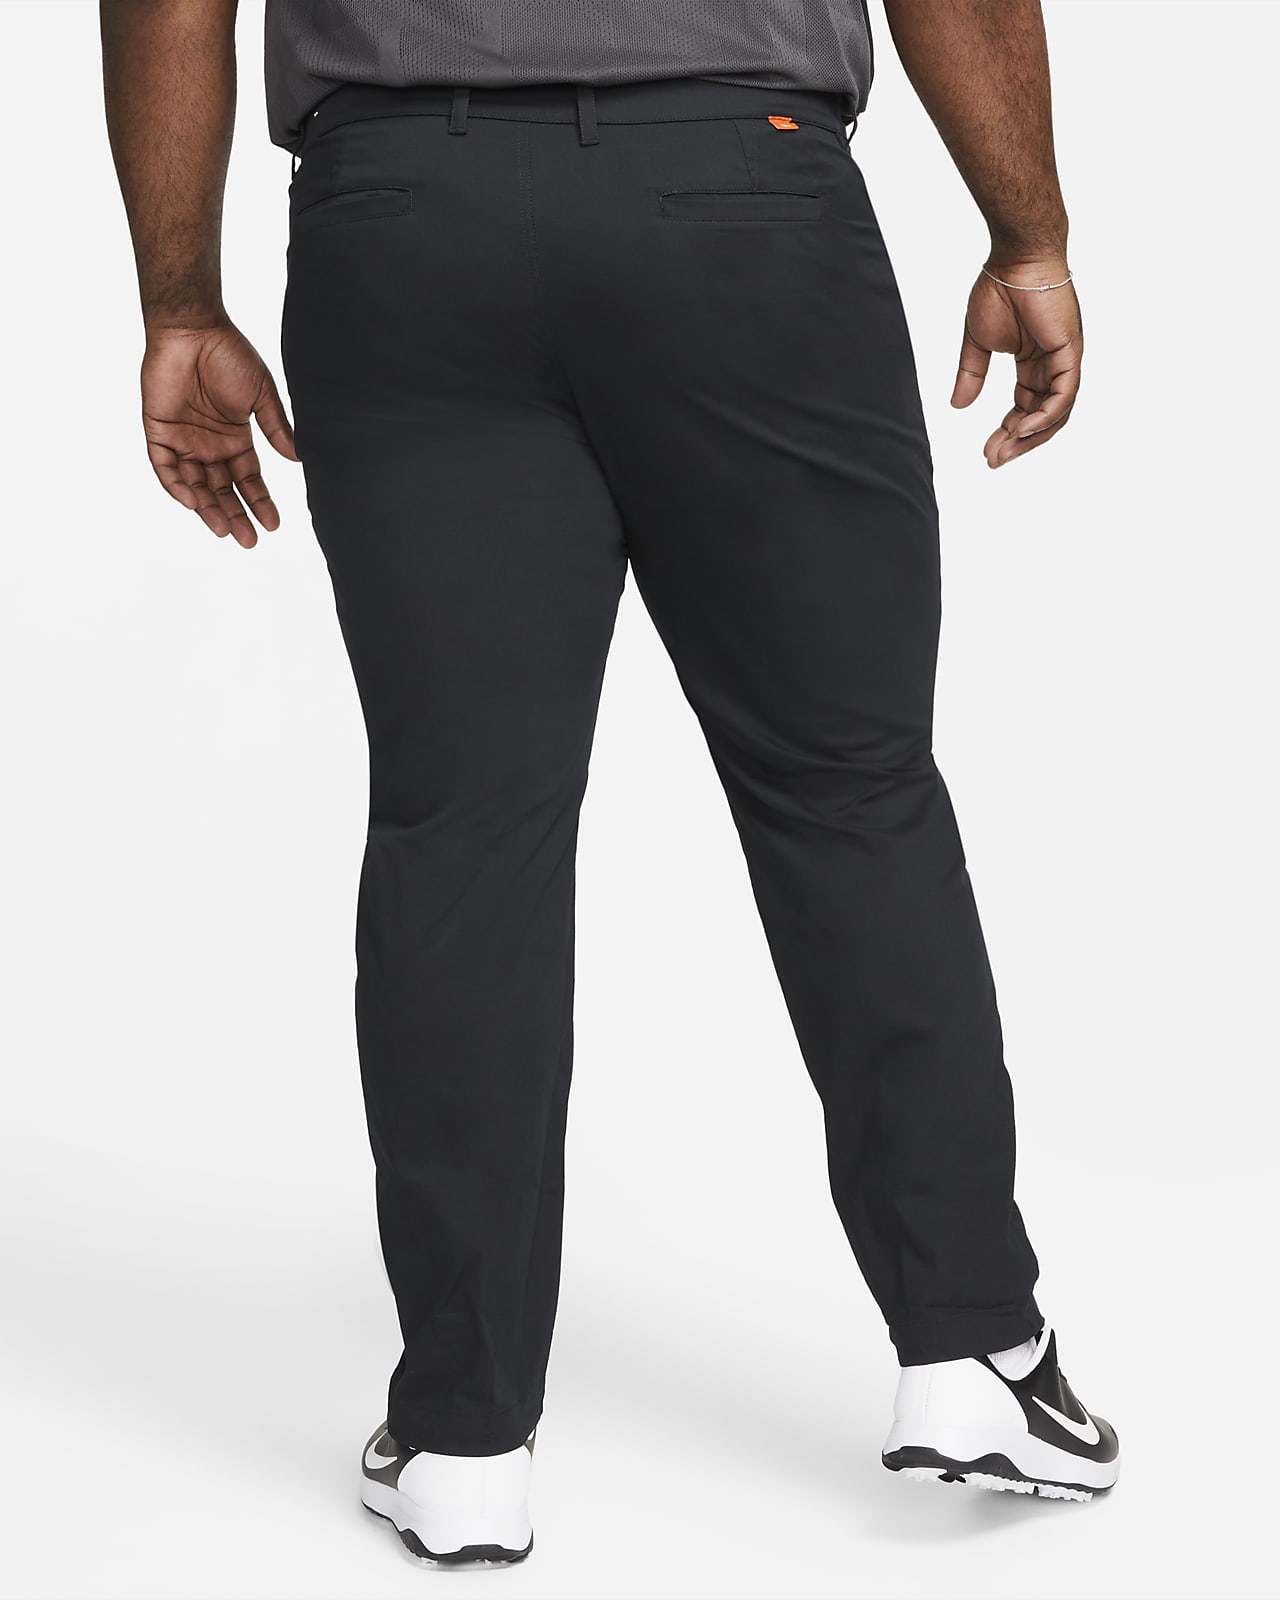 Golf Pants for Men Track Sweatpants lace up Pant Slim fit Golf